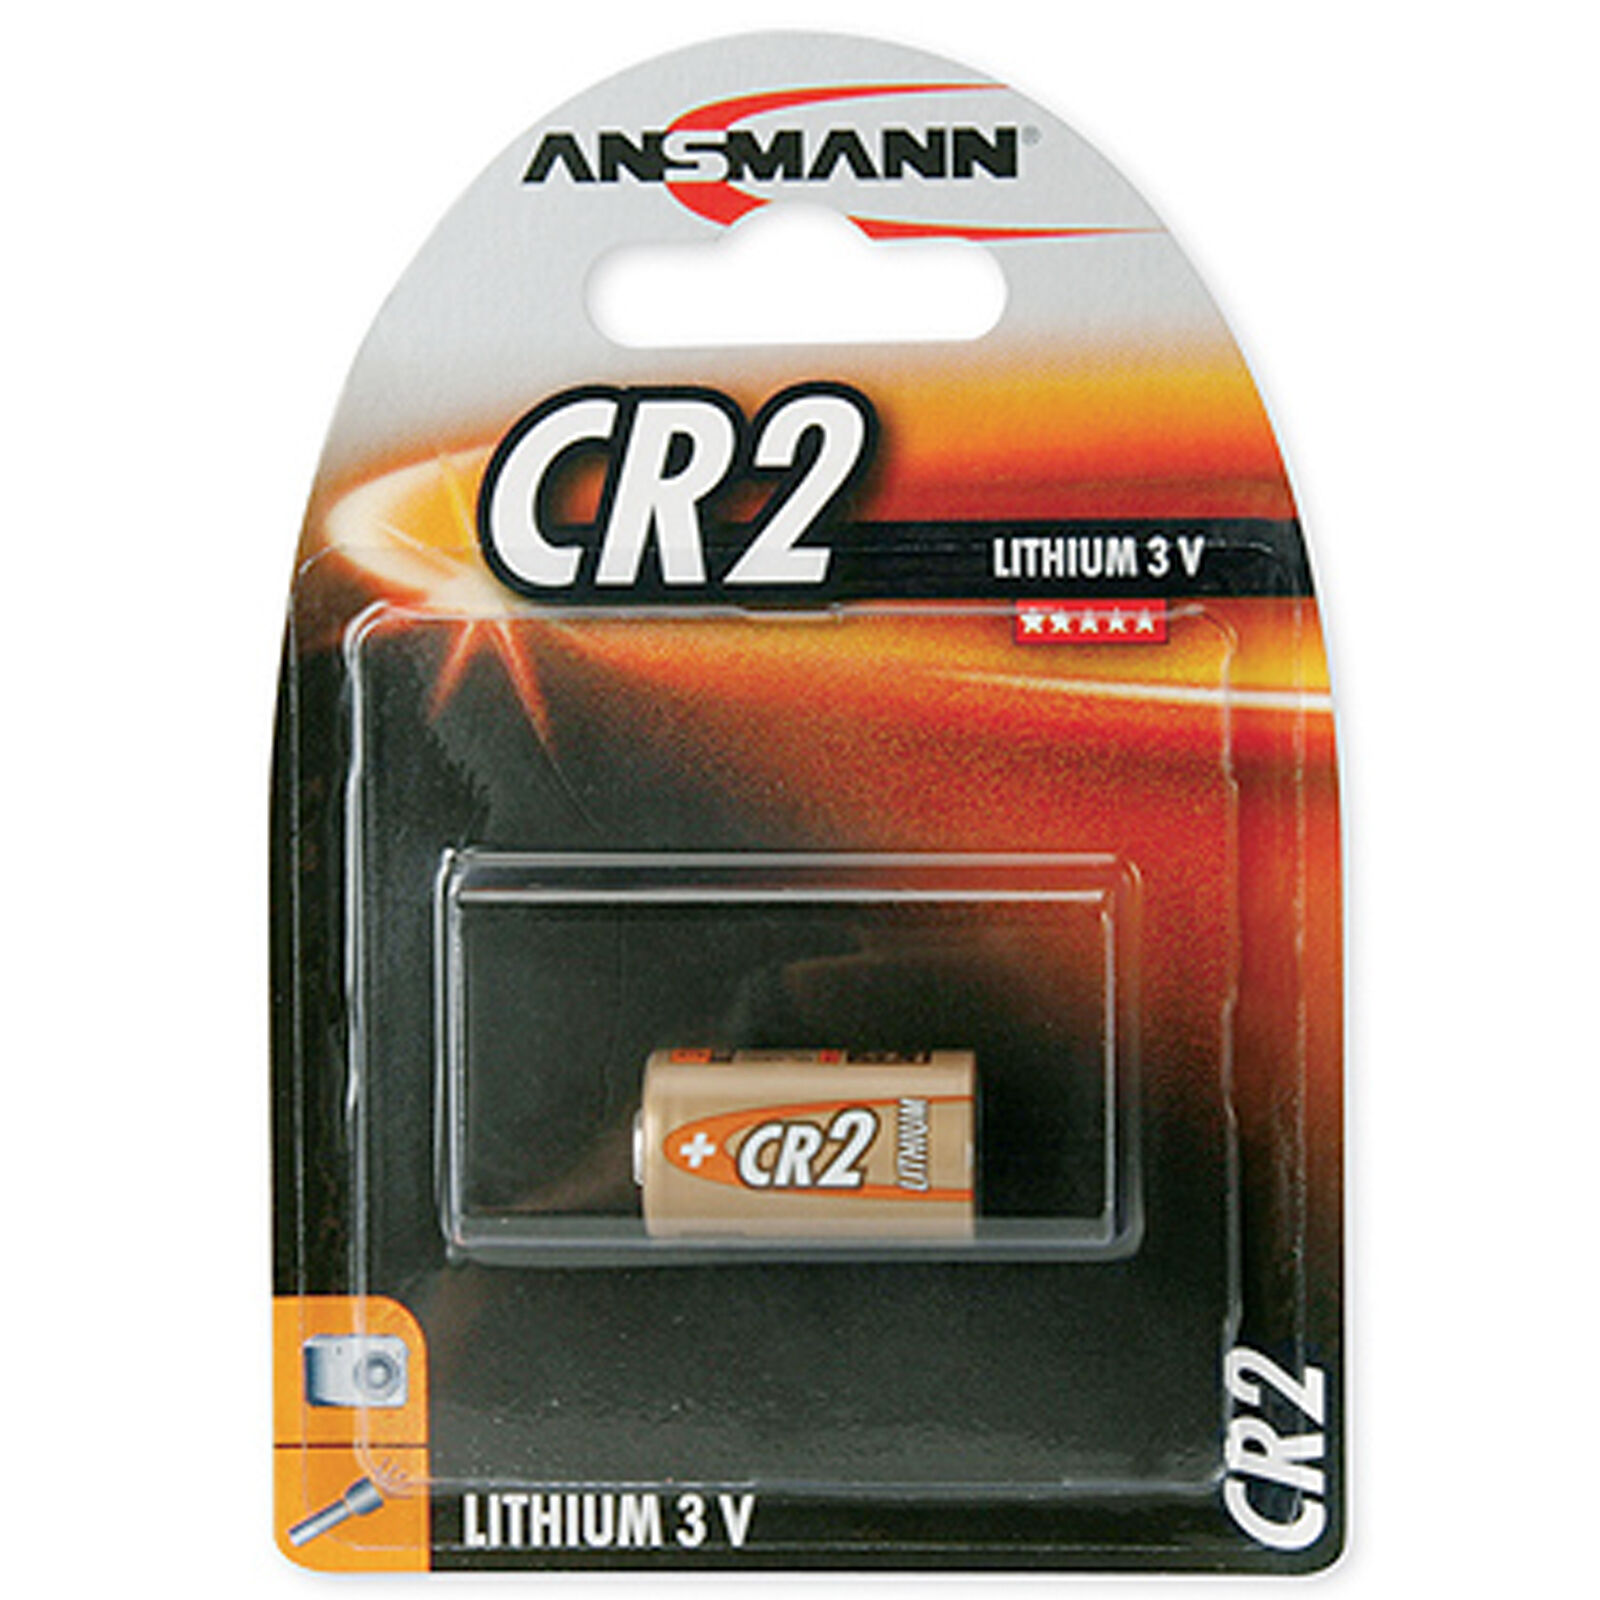 5x Ansmann cr2 Lithium Battery - 750 mAh Photo Battery - 3 Volt